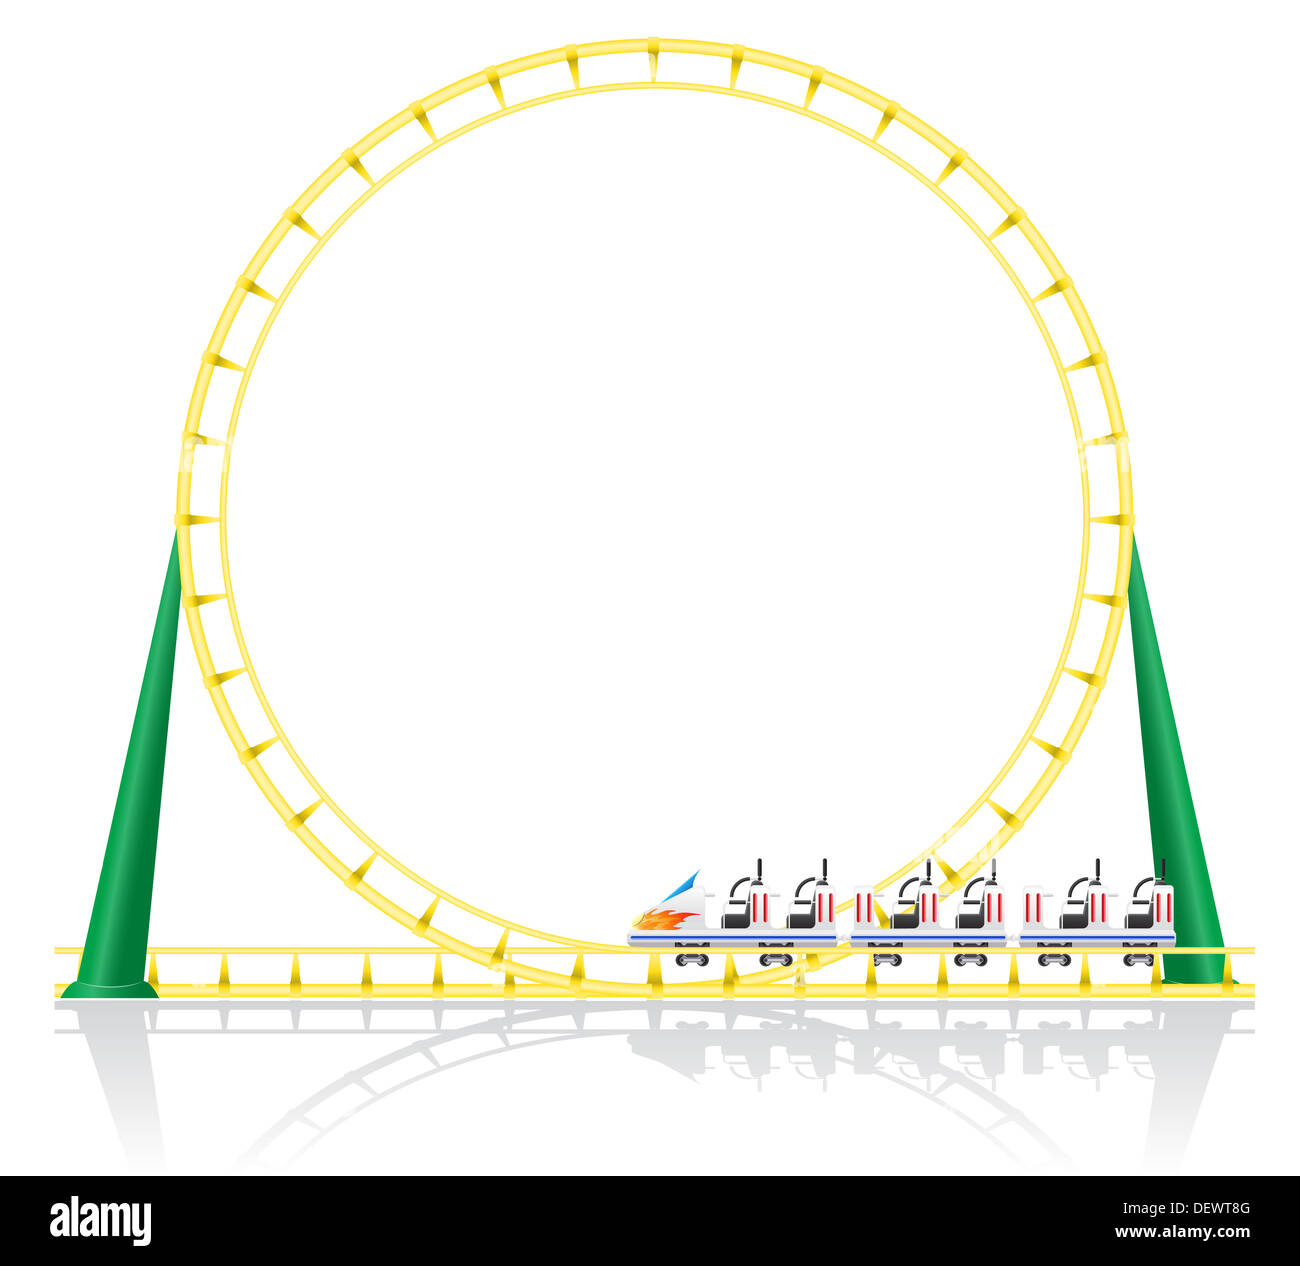 roller coaster illustration isolated on background Stock Photo - Alamy